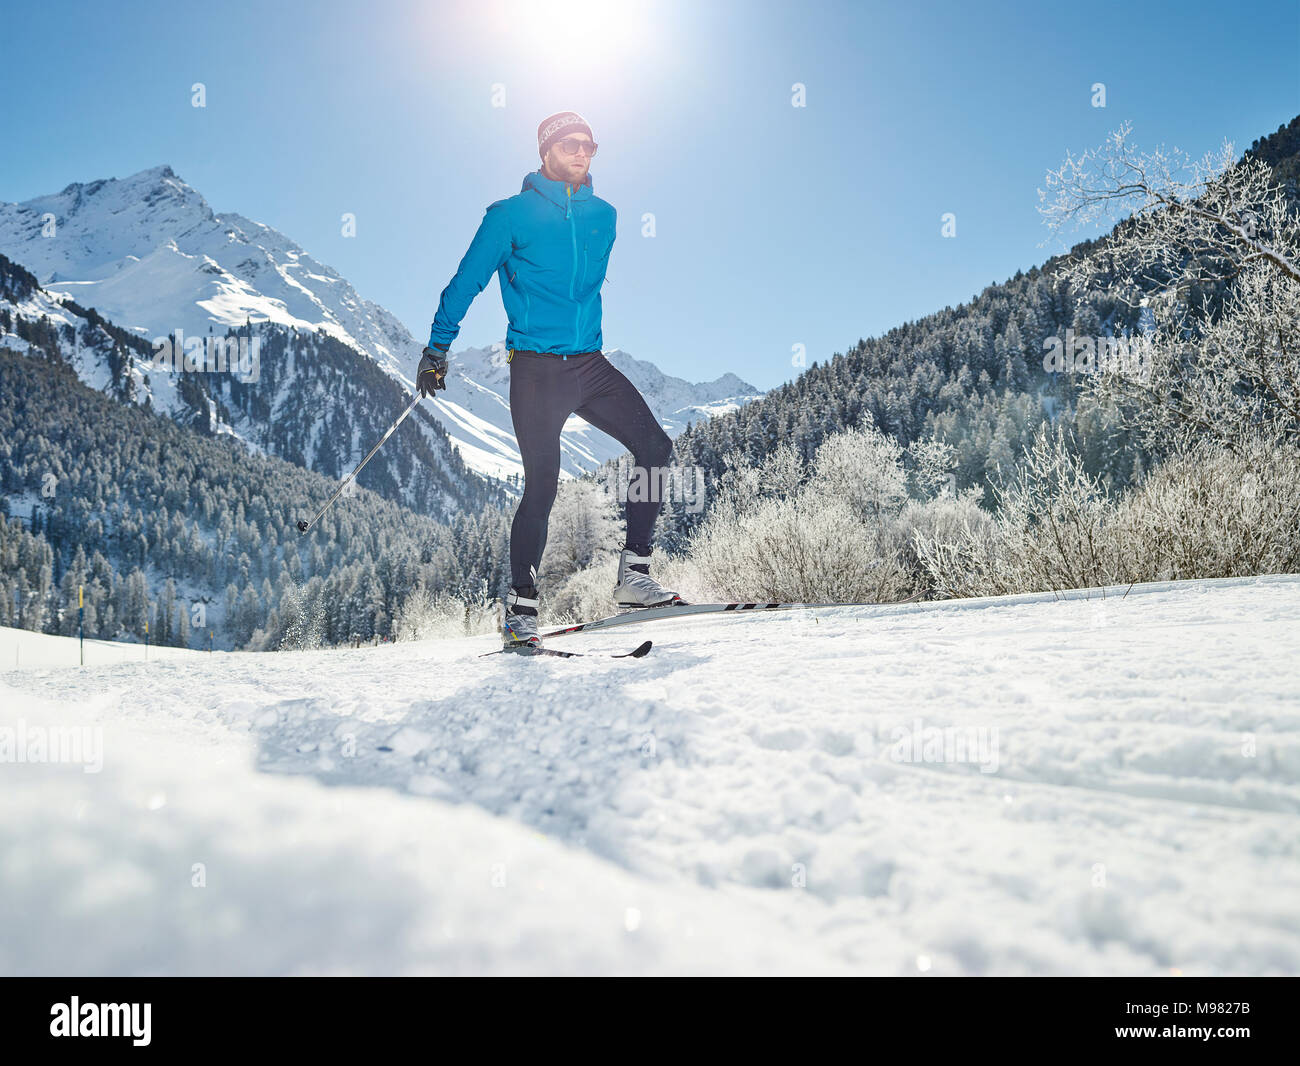 Austria, Tyrol, Luesens, Sellrain, cross-country skier in snow-covered landscape Stock Photo